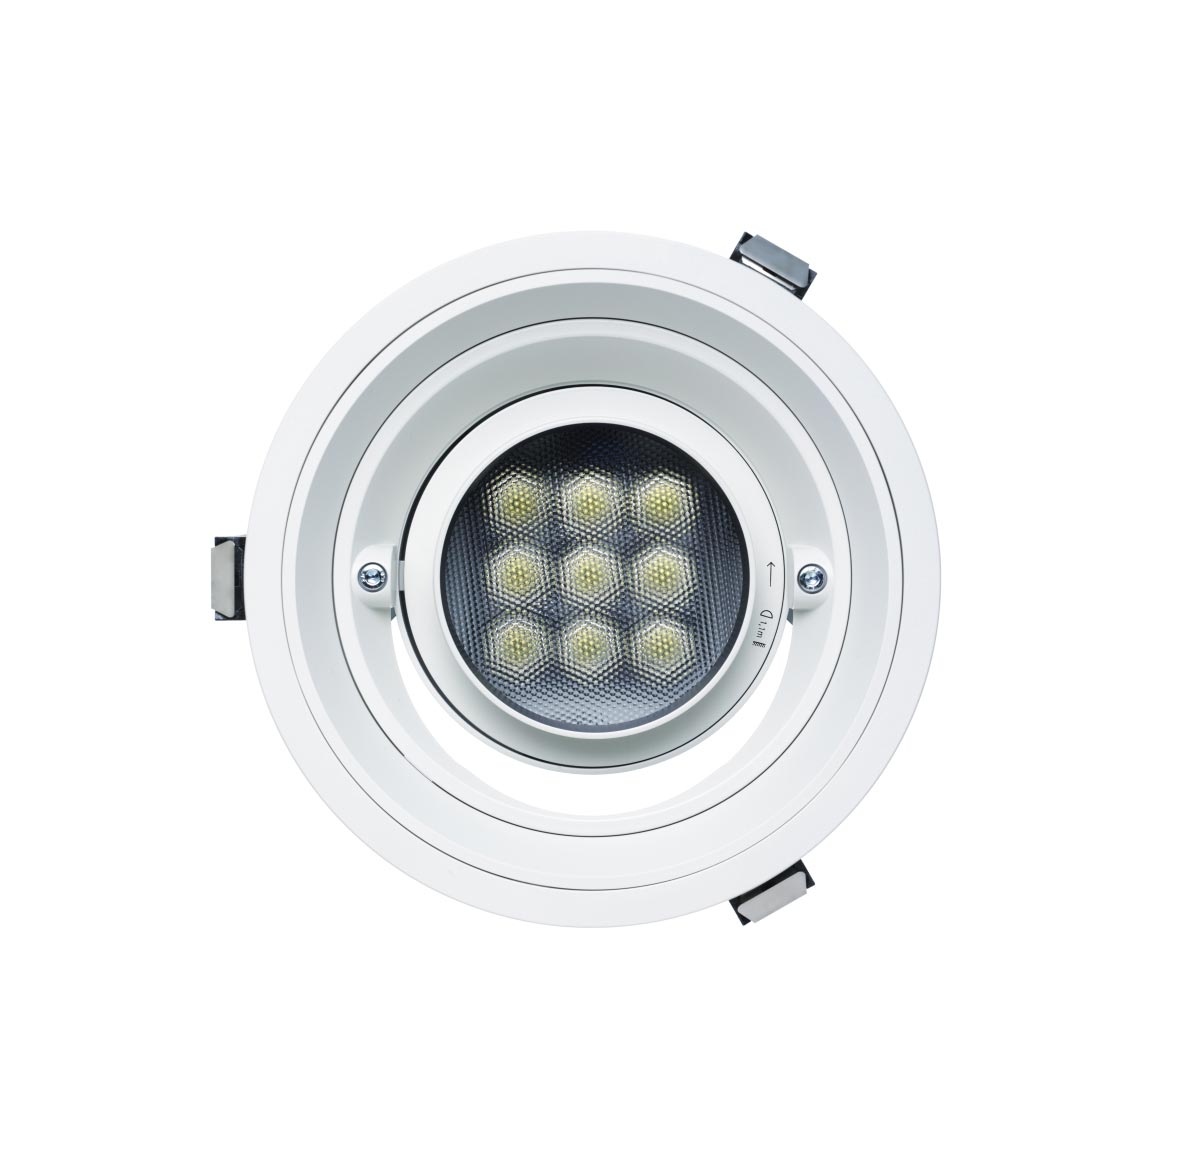 Quintessence Round Recessed Adjustable Spotlight With Regressed Mounting Tray Spot Beam 18W LED 3000K DALI White Trim F/P